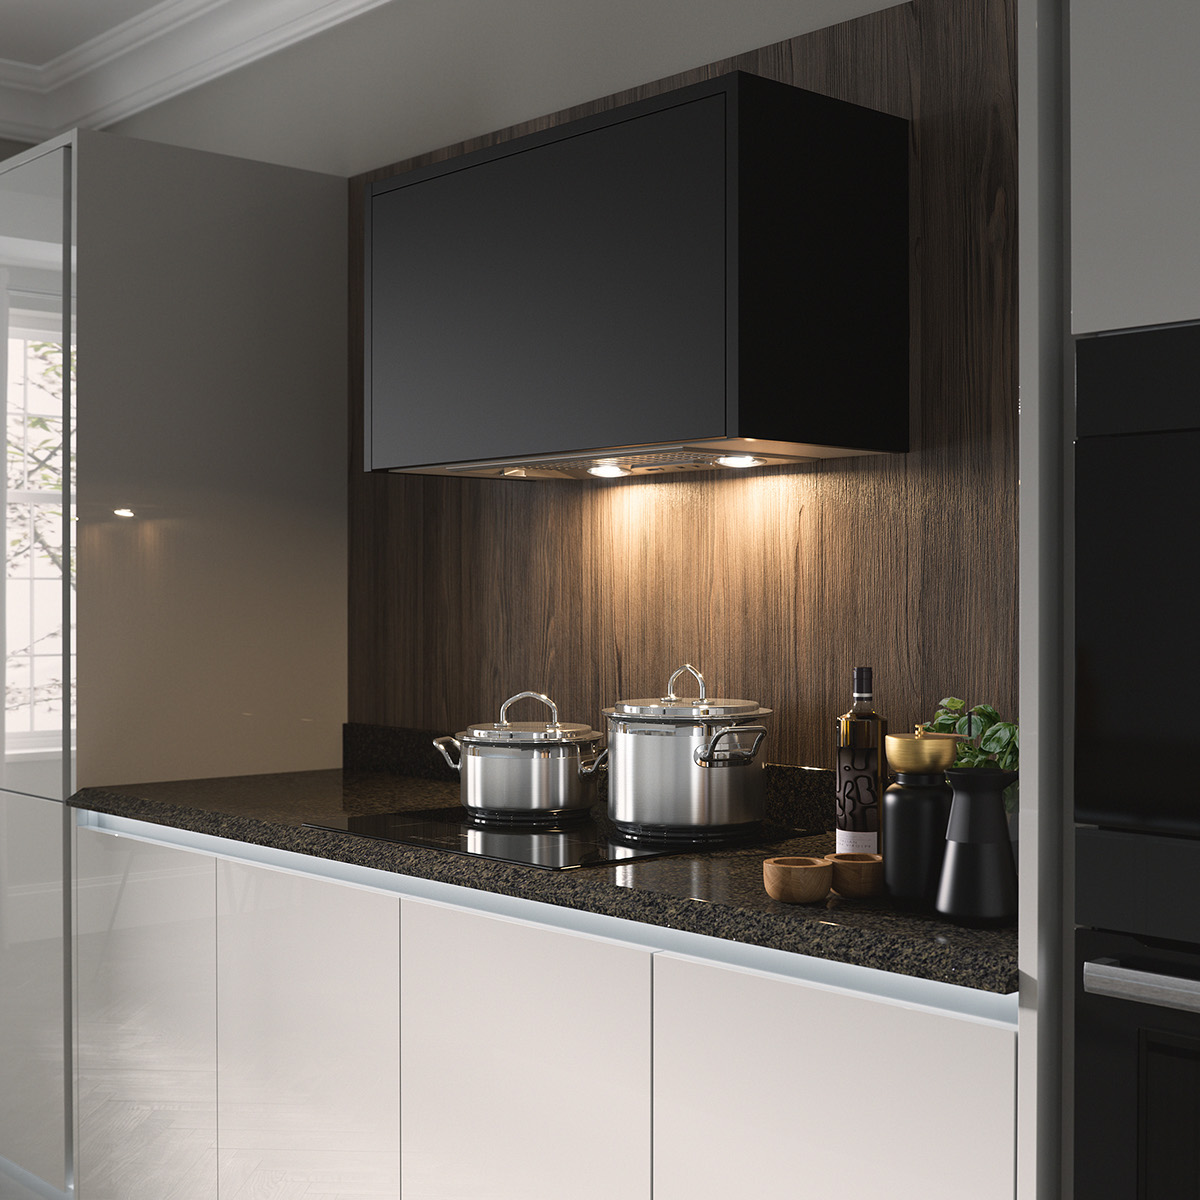 kitchen cgi CG Kitchens CG roomsets CGI 3D interior visualisation kitchen rendering